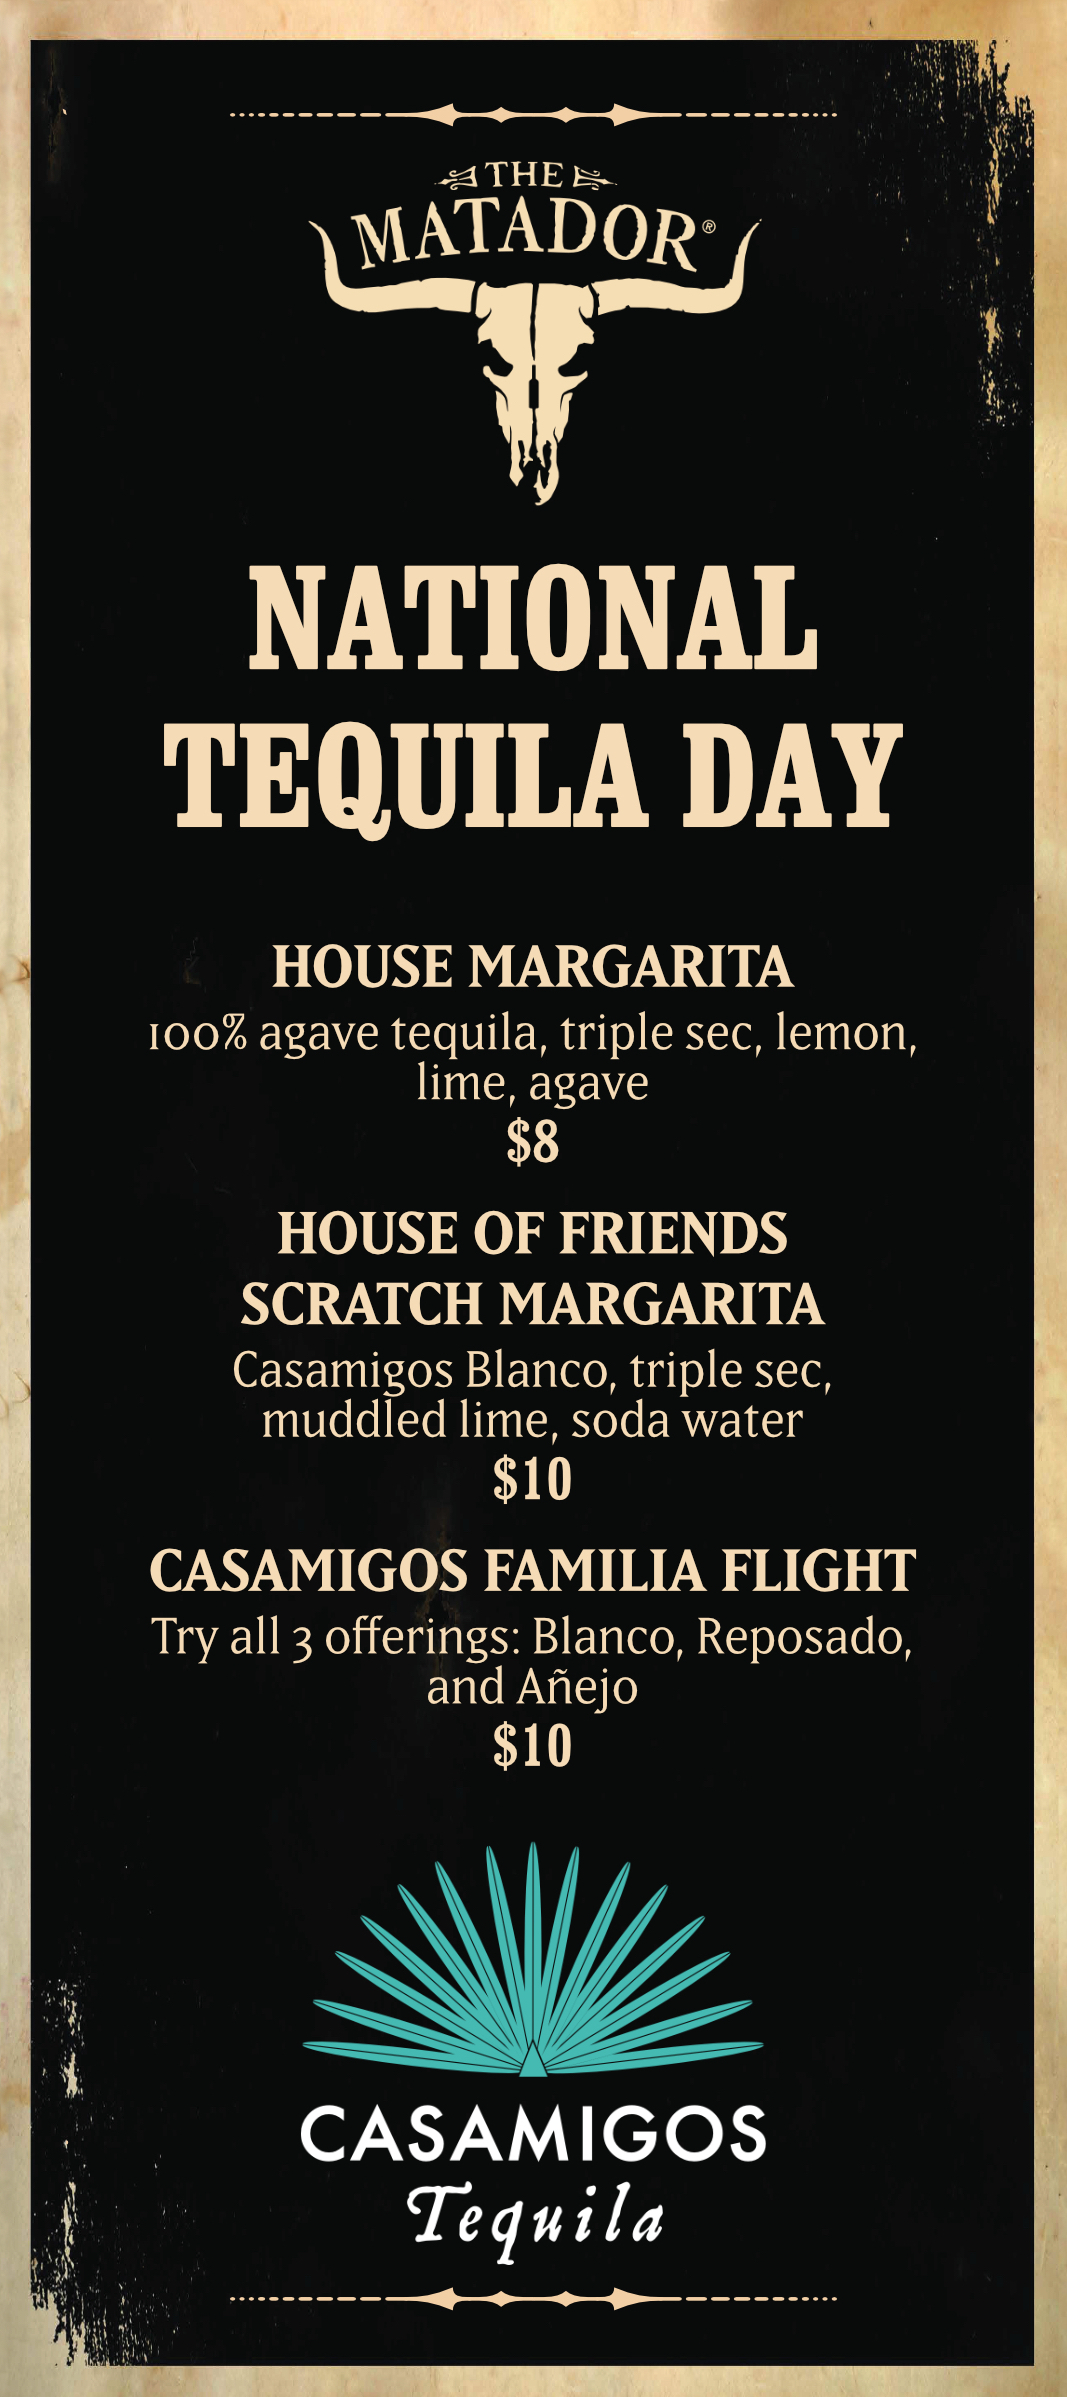 Matador National Tequila Day